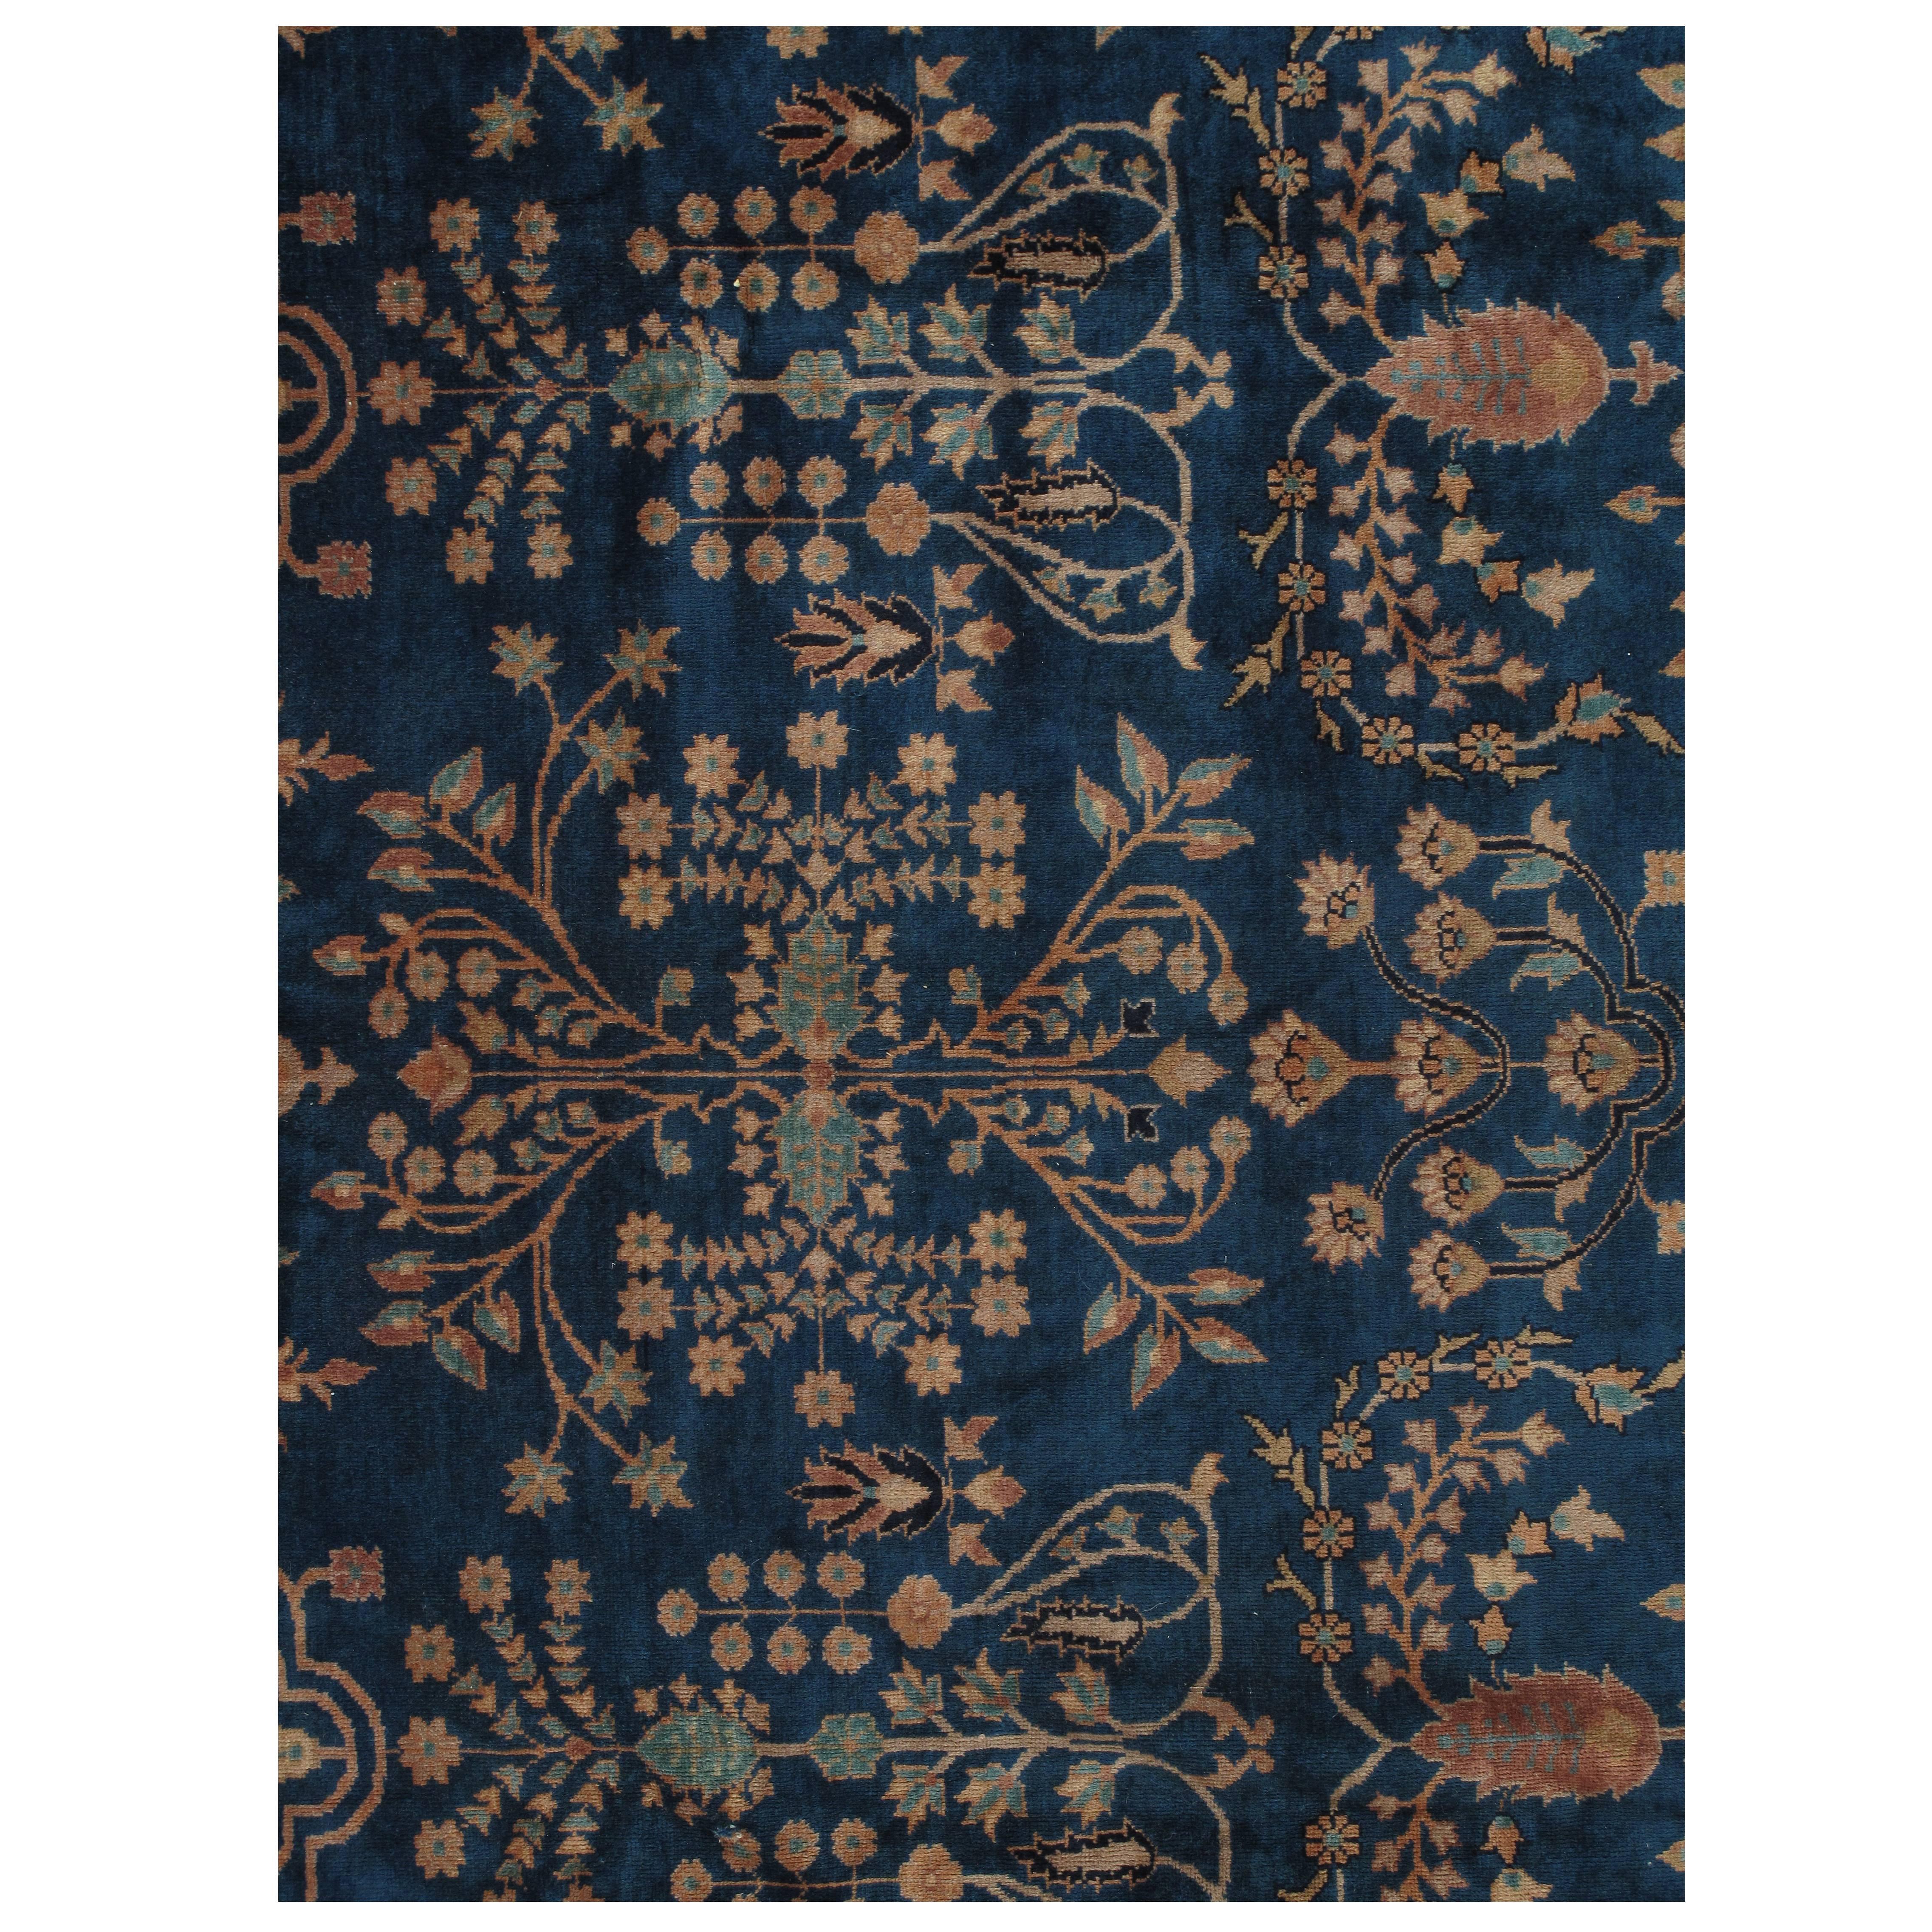 Antique Indian Agra Carpet, Handmade Oriental Rug, Blue, Gold, Ivory, Allover